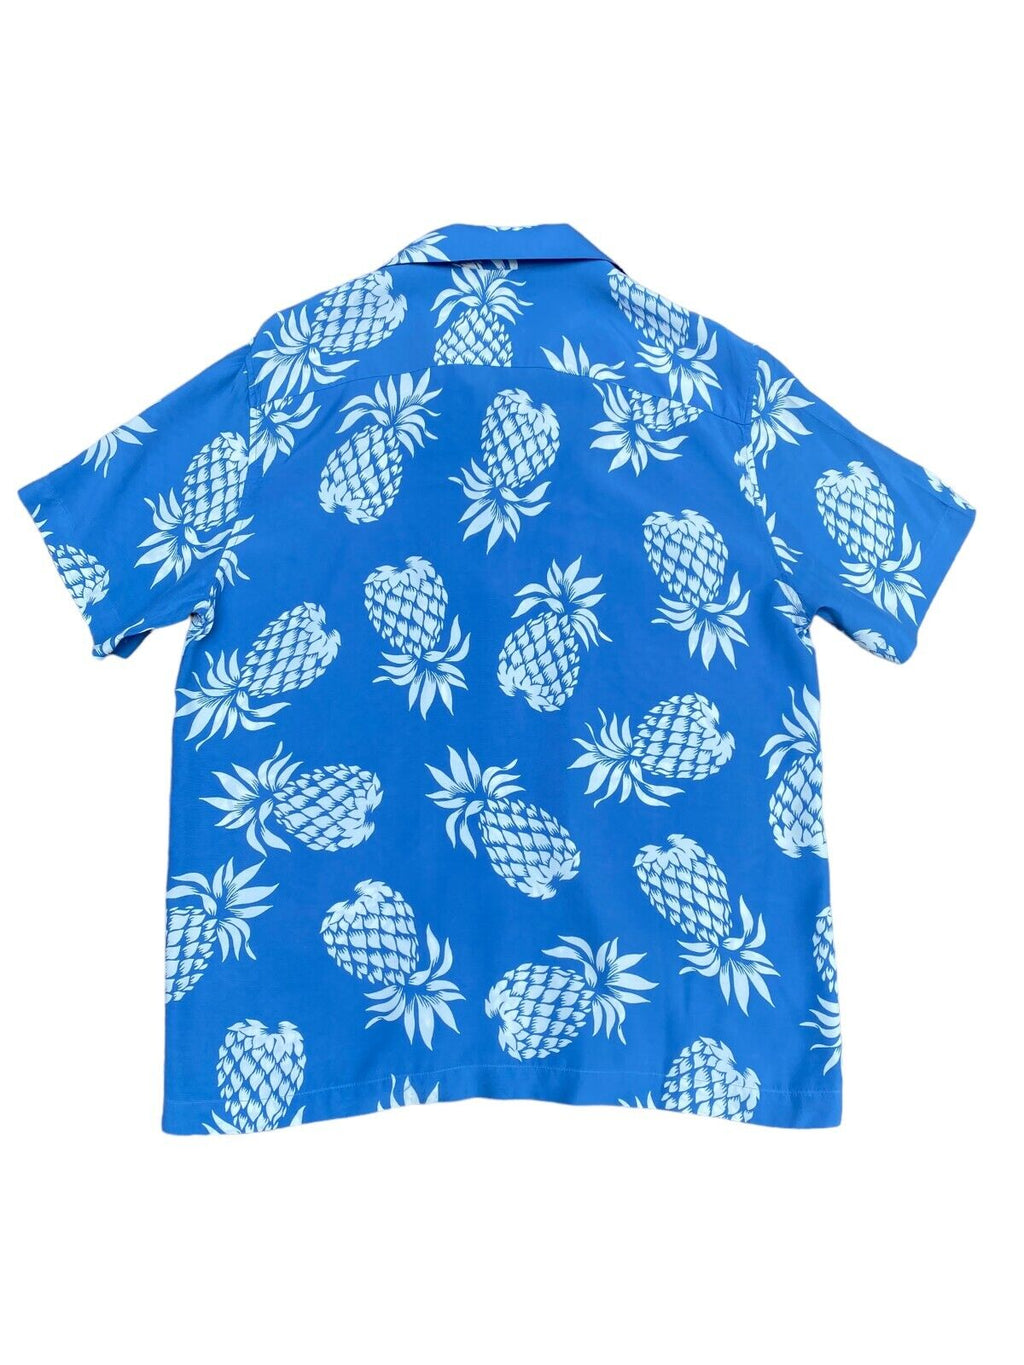 Blue white Hawaiian Shirt